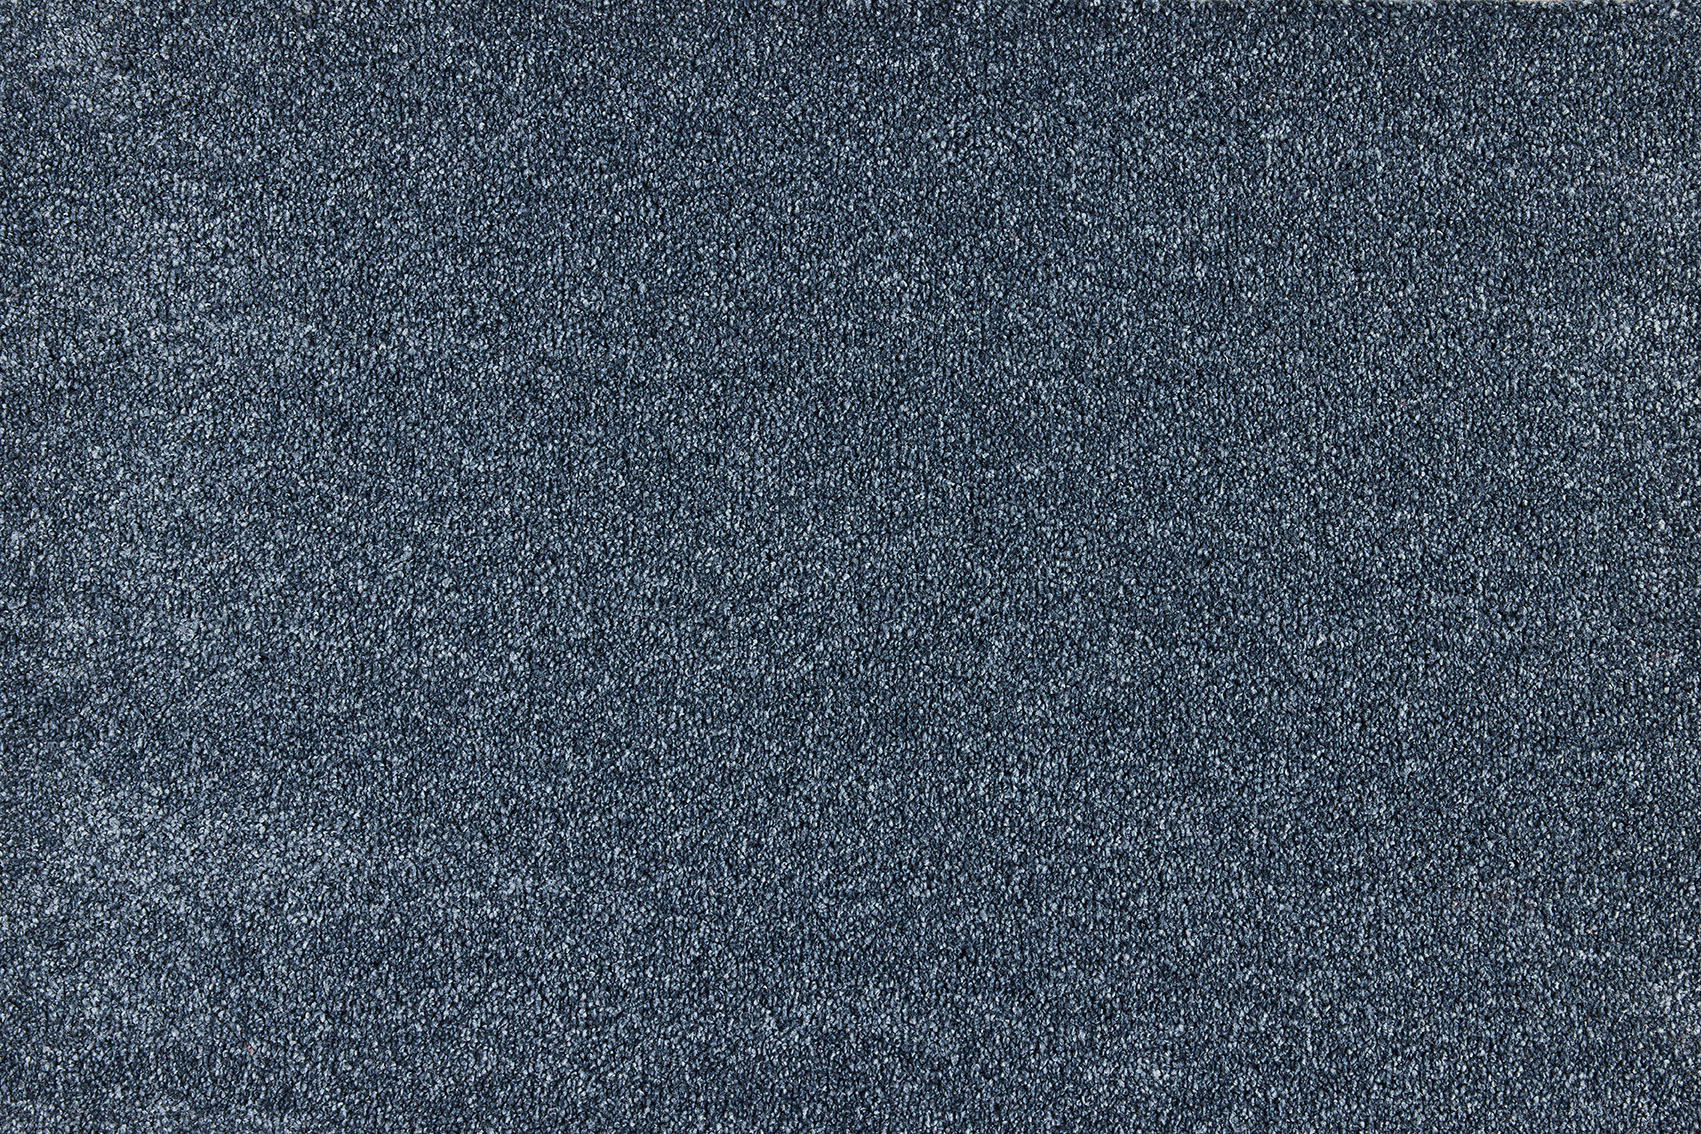 Mocheta dormitor Charisma albastru cod 710 fir taiat inaltime 9 mm fir rasucit pentru interior